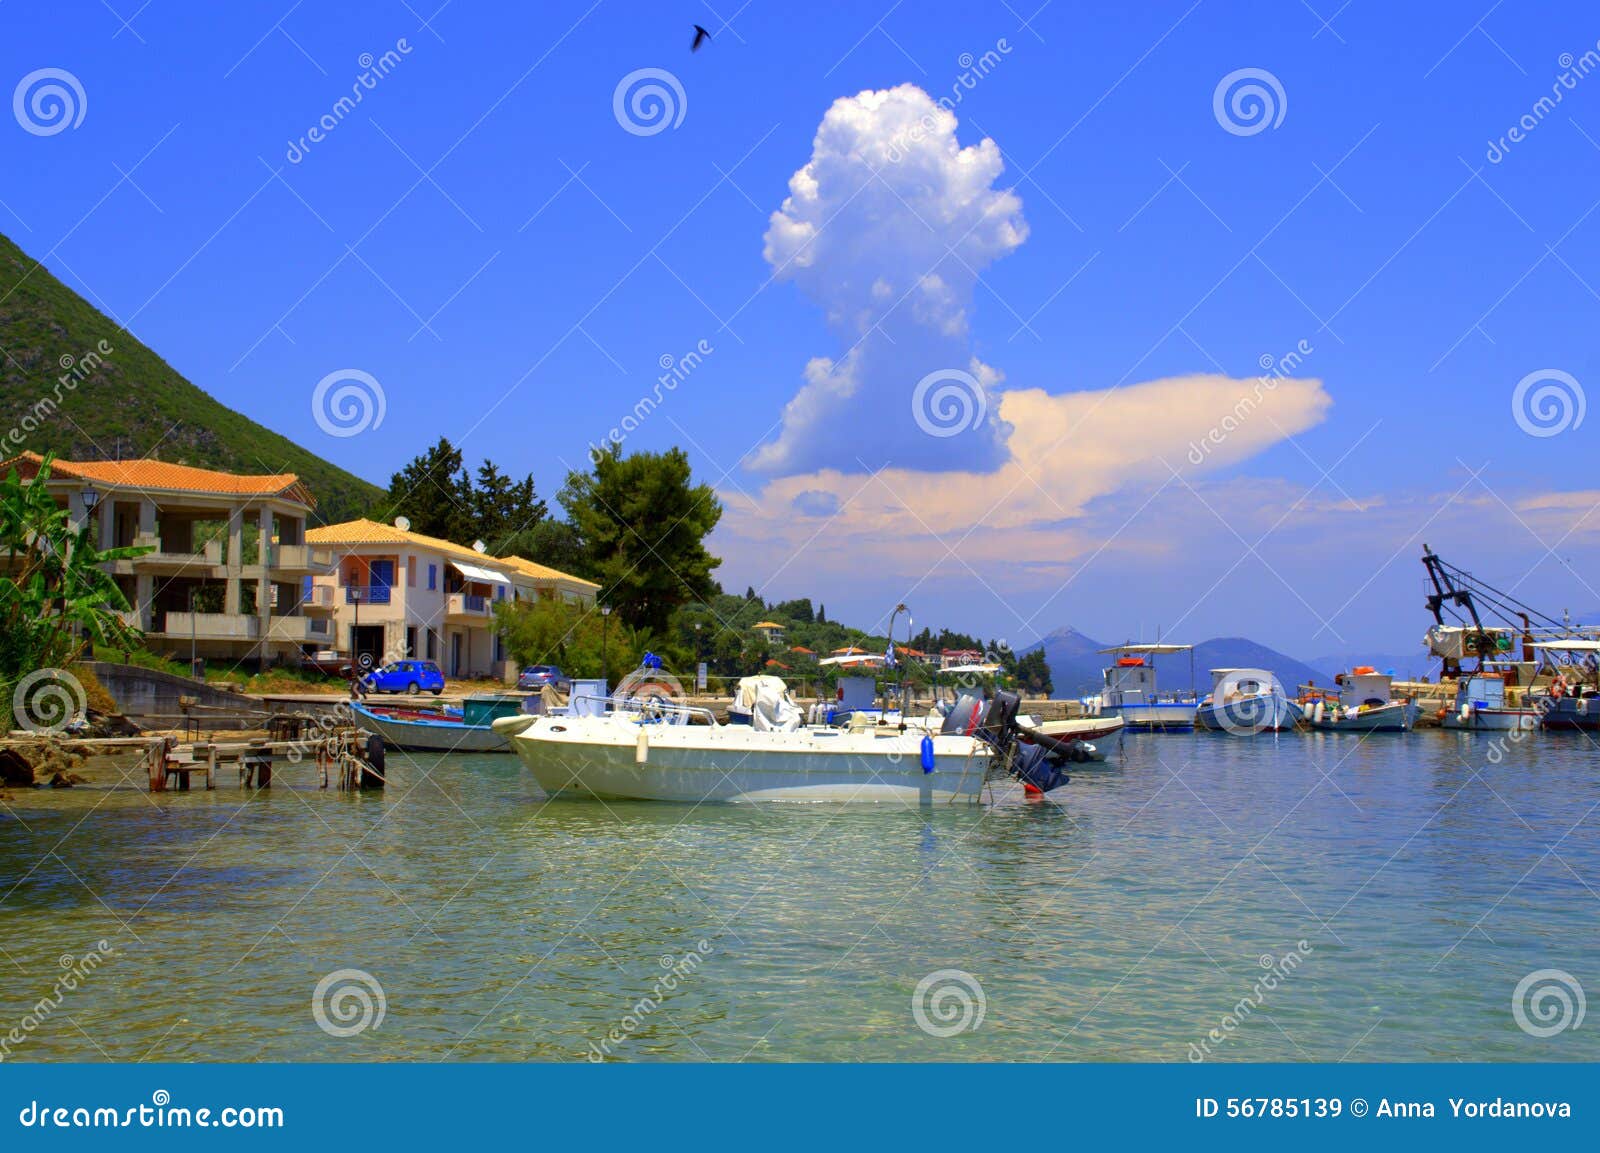 Beautiful Greek Island Coastline View Stock Image - Image of lefkada ...